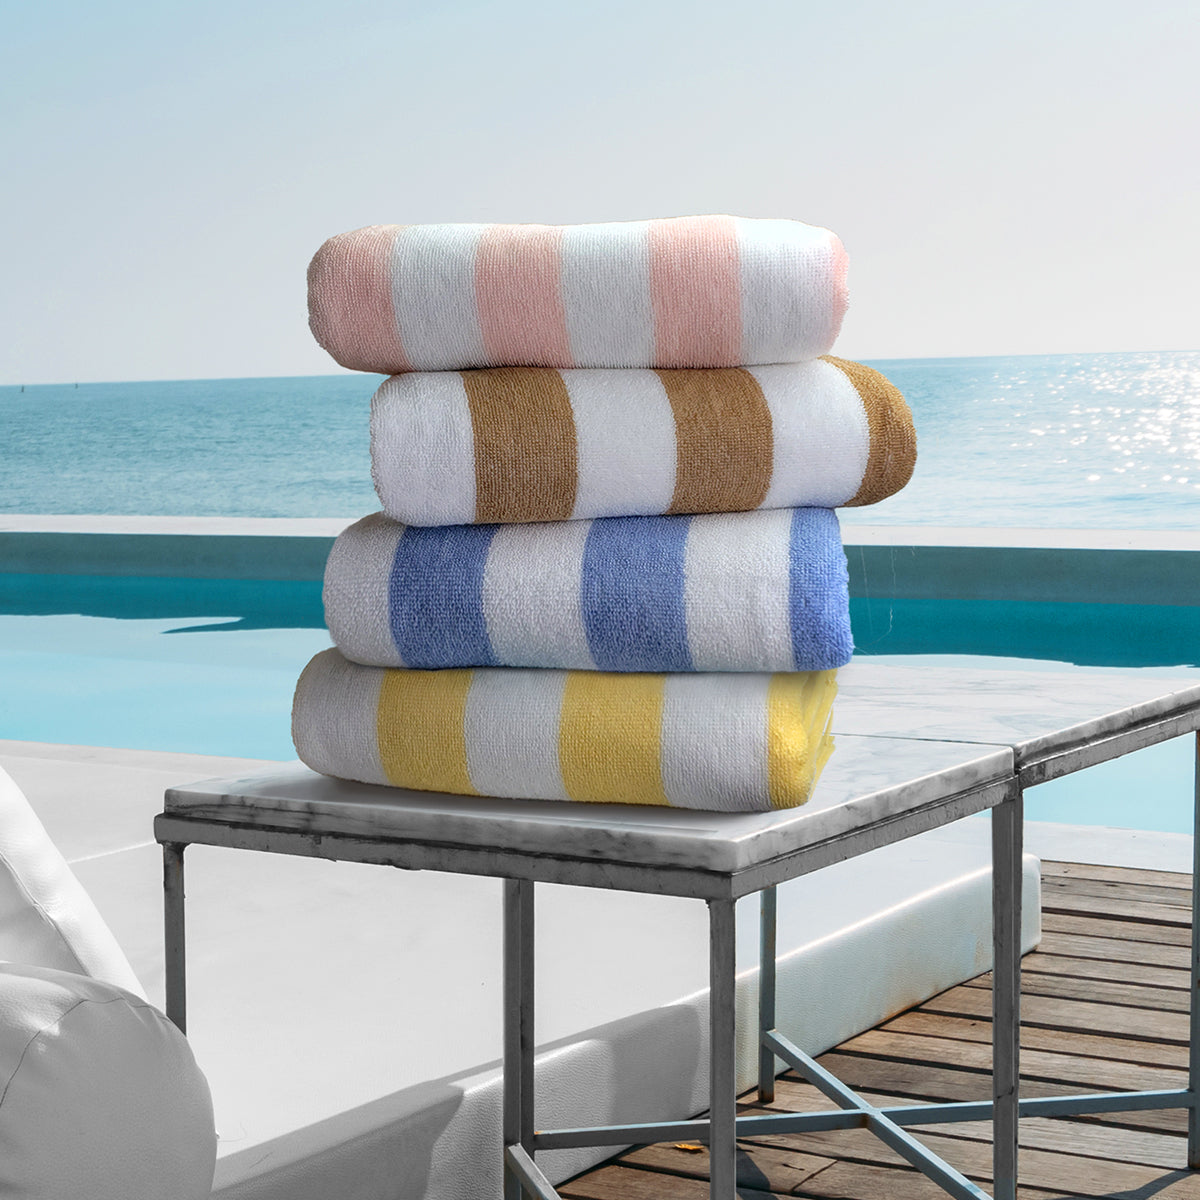 Bath Sheet - Oxford Vicenza Towel - Bulk Linen Supply